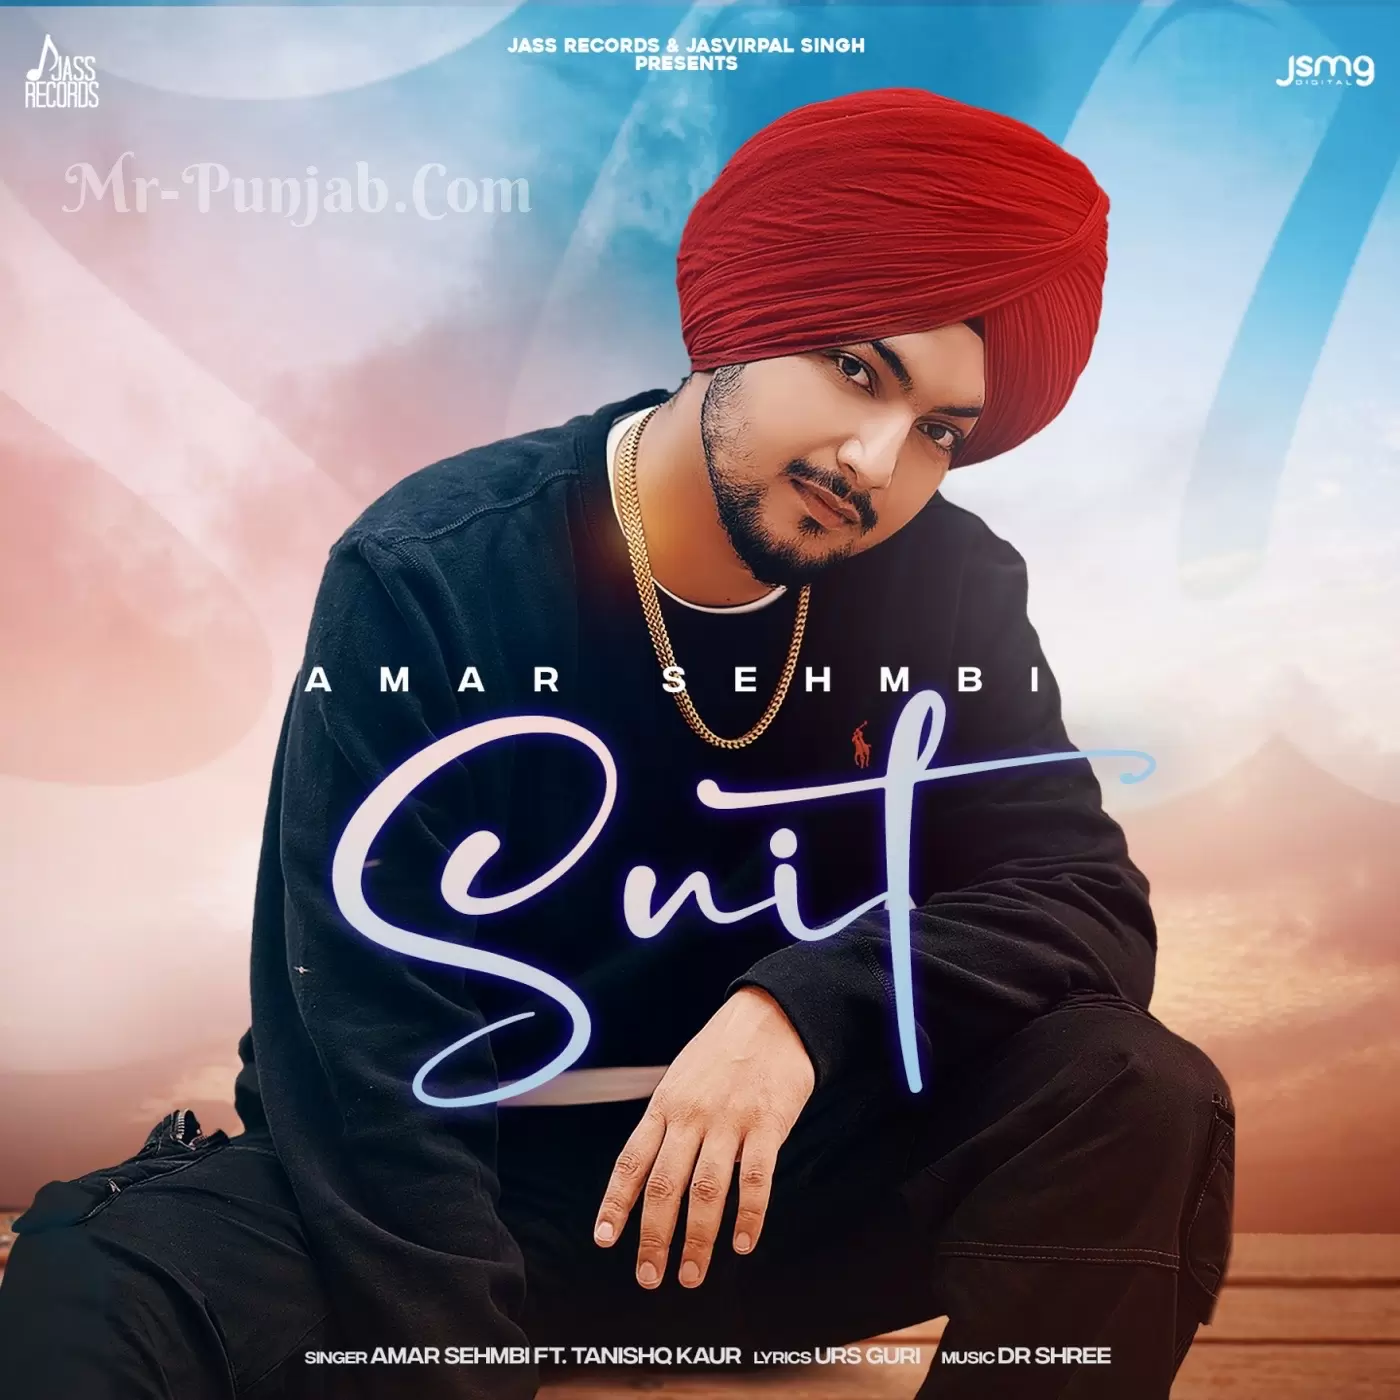 Suit Amar Sehmbi Mp3 Download Song - Mr-Punjab